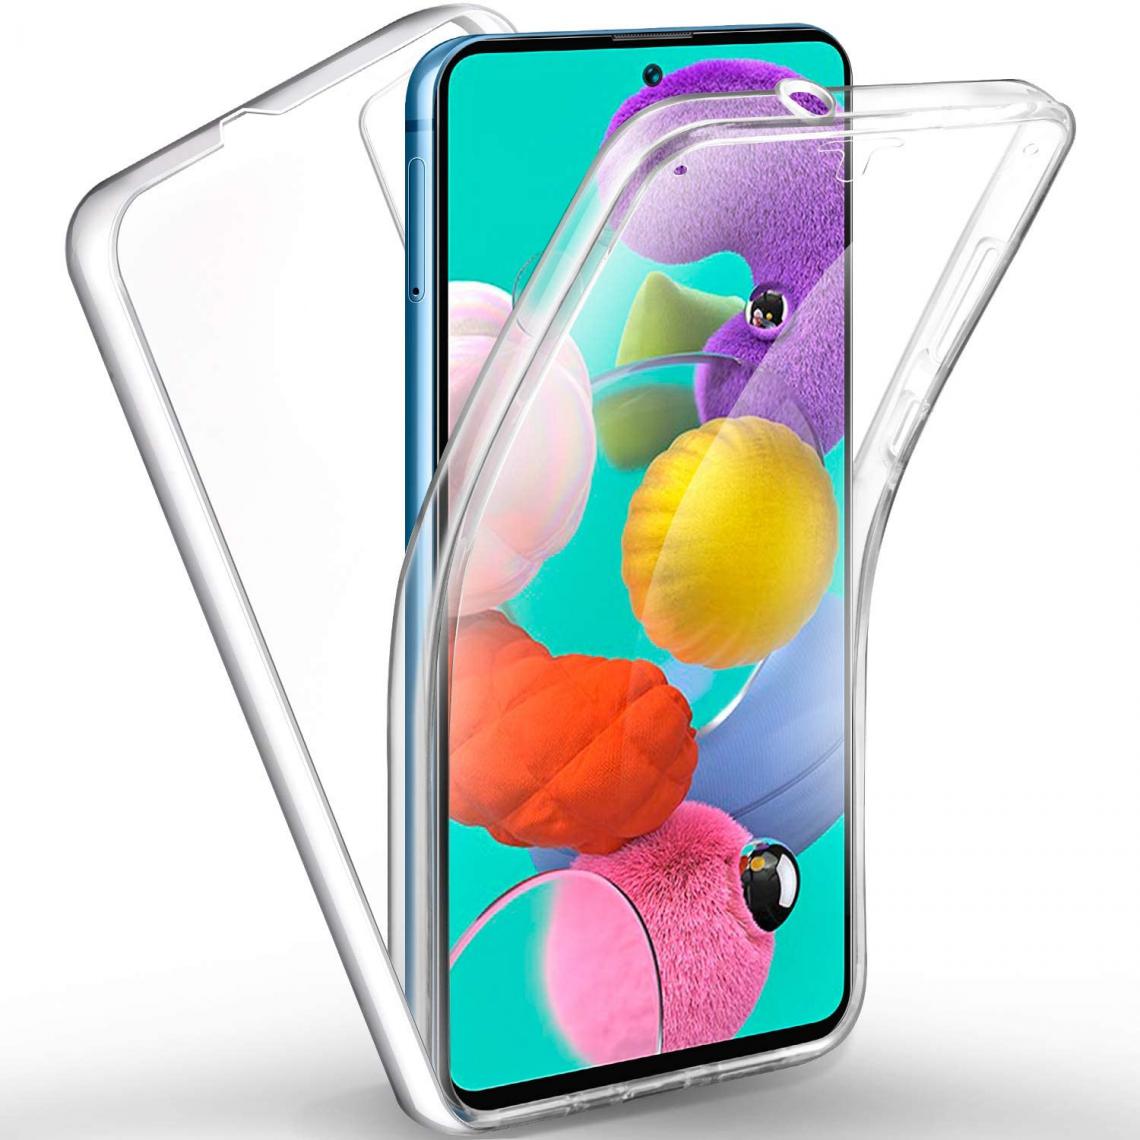 Shot - Coque Silicone Integrale Transparente pour "SAMSUNG Galaxy A51" Protection Gel Souple - Coque, étui smartphone